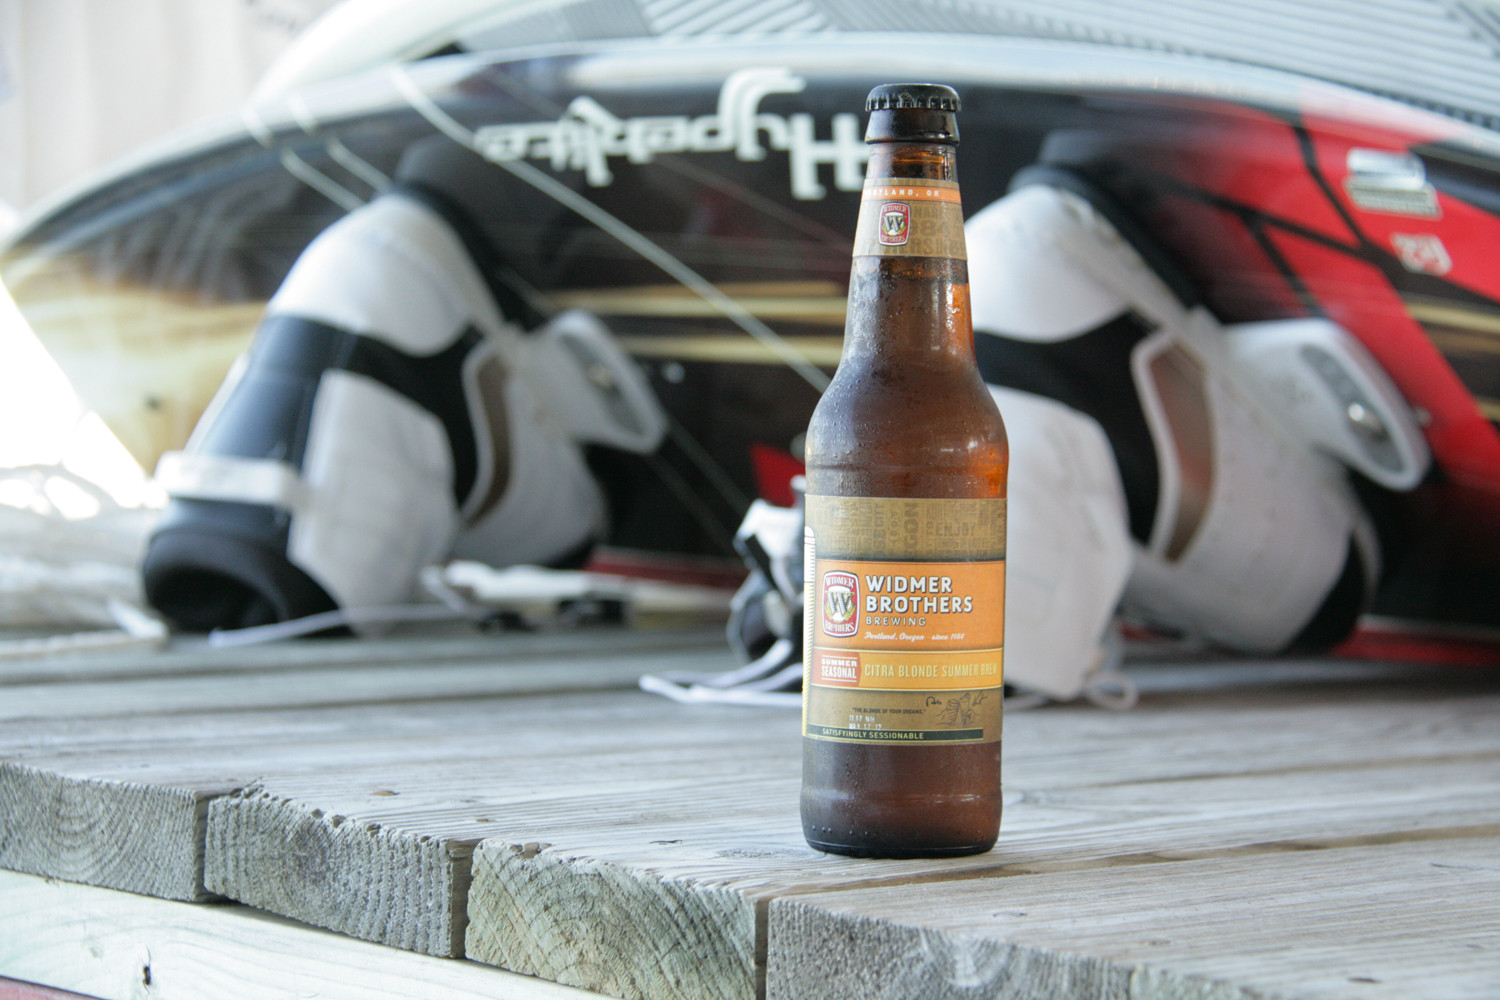 Enjoy Citra Blonde Summer pool beer this warm season.